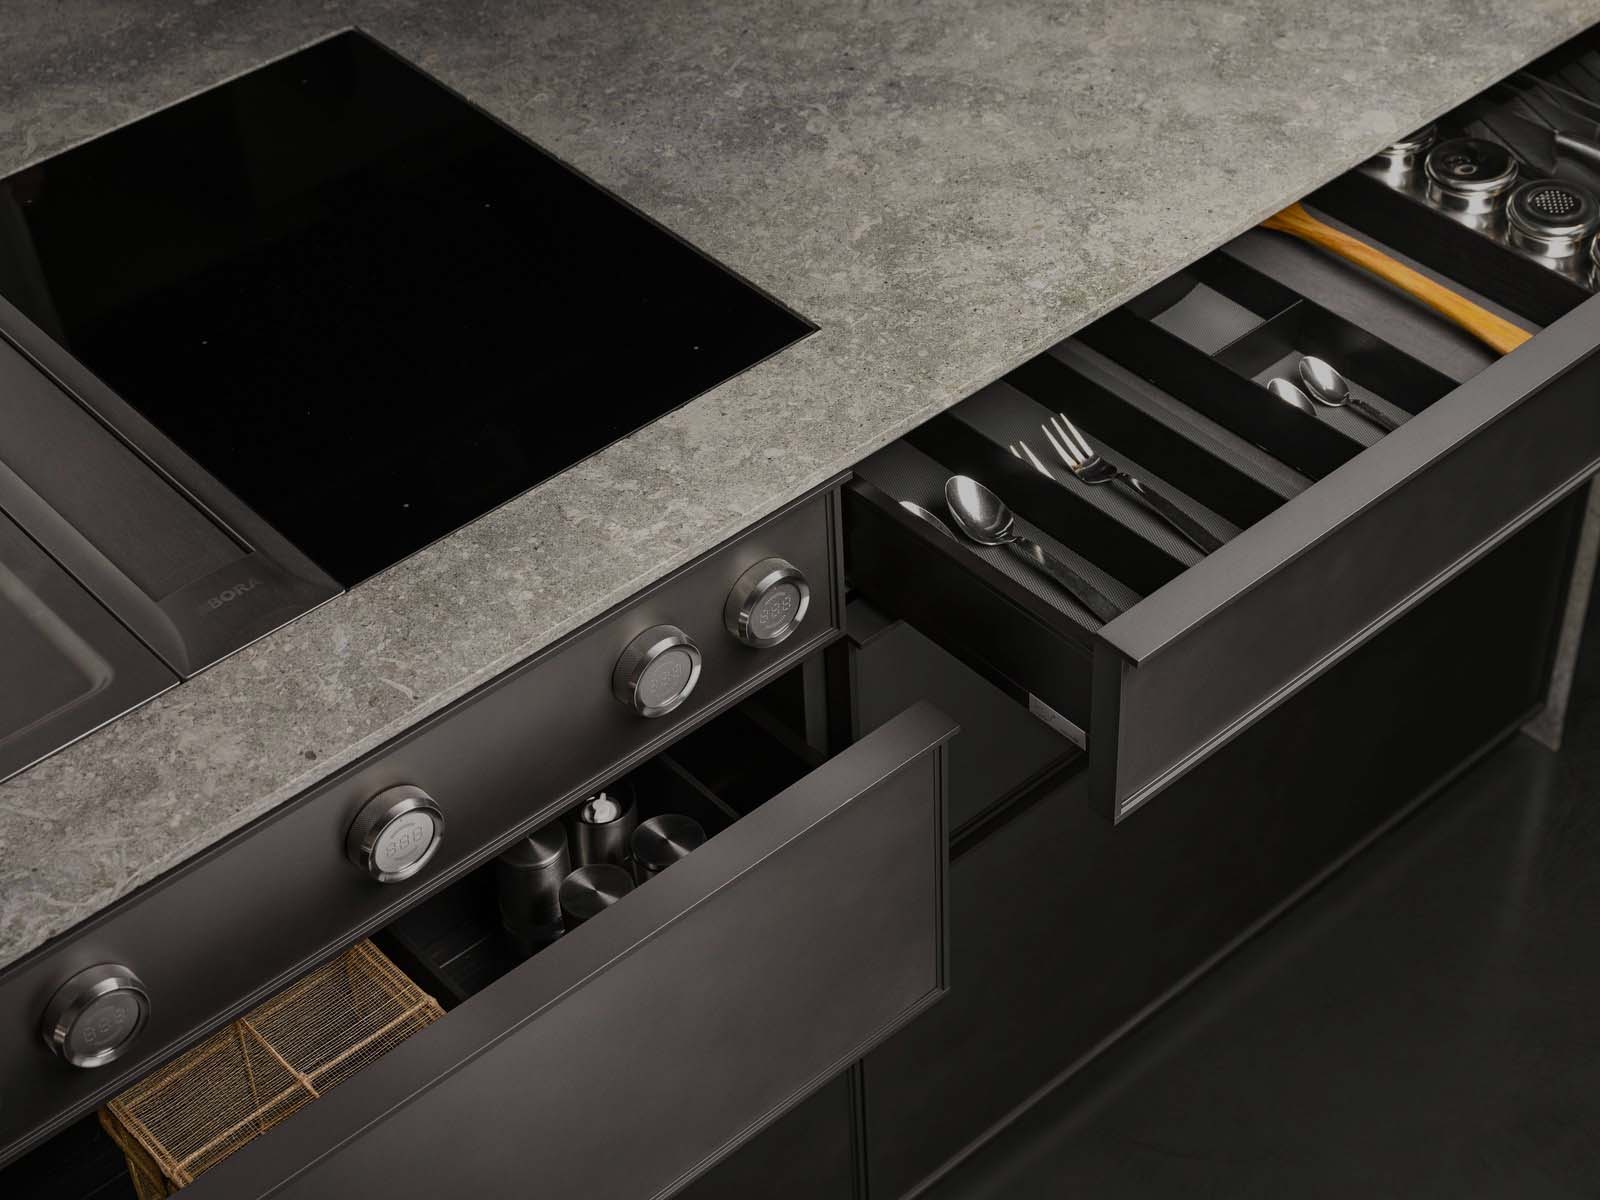 Krieder UK, Krieder design service specialising with installation of BORA cooktops and kitchen appliances.